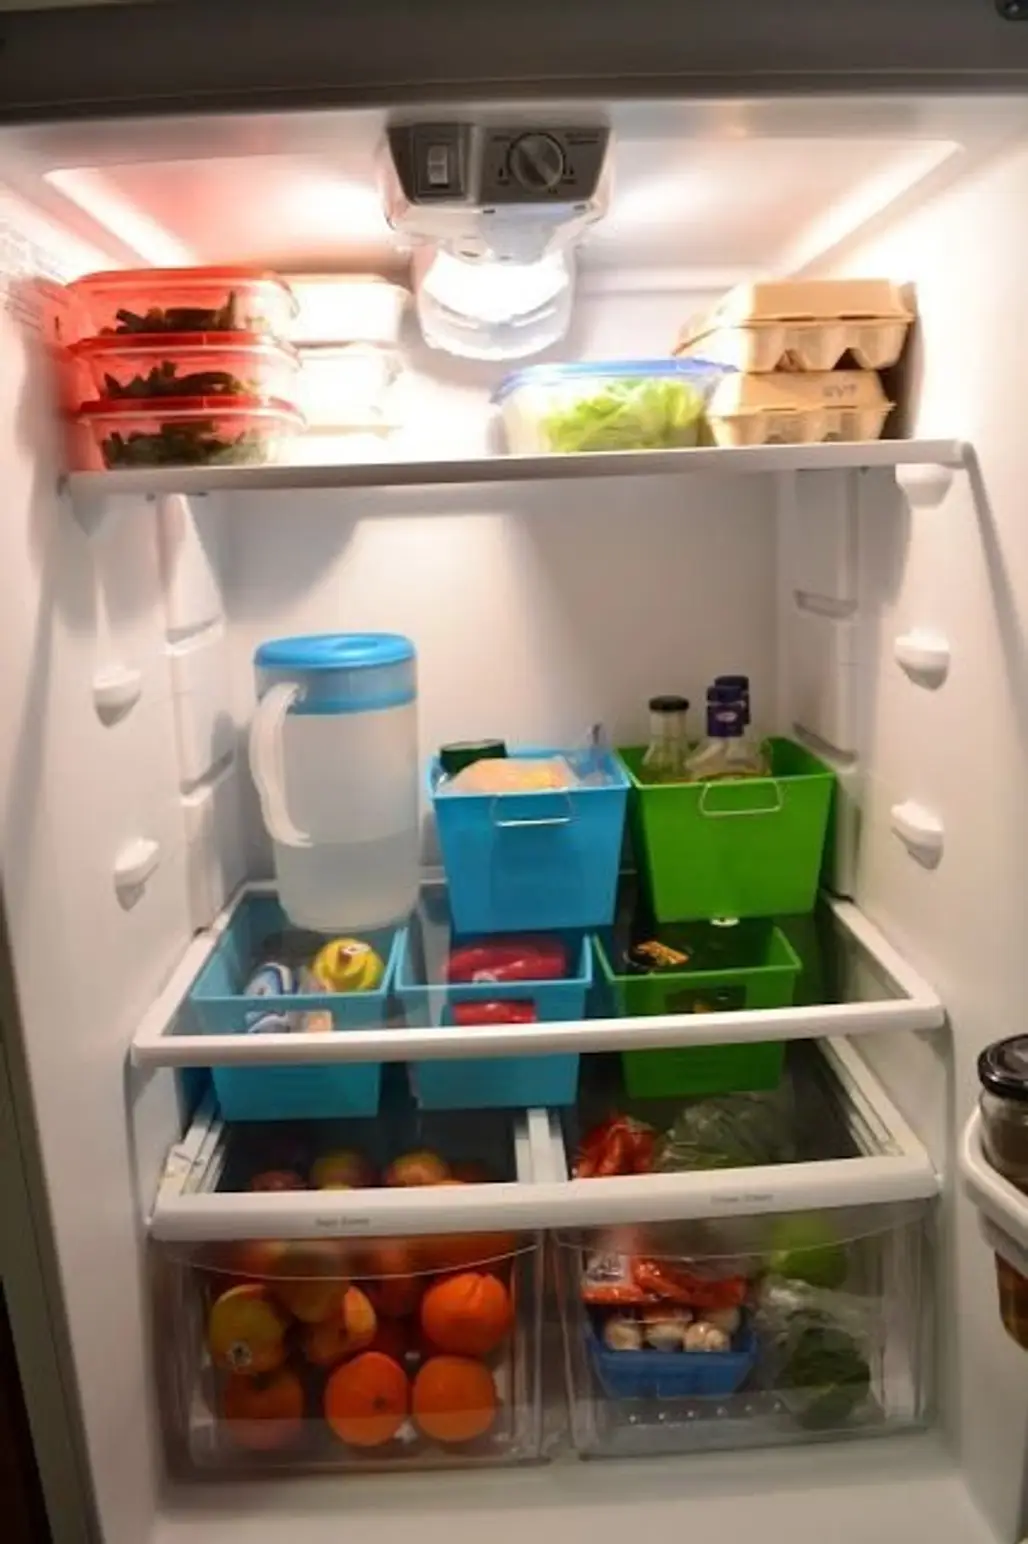 room,product,shelf,refrigerator,kitchen,